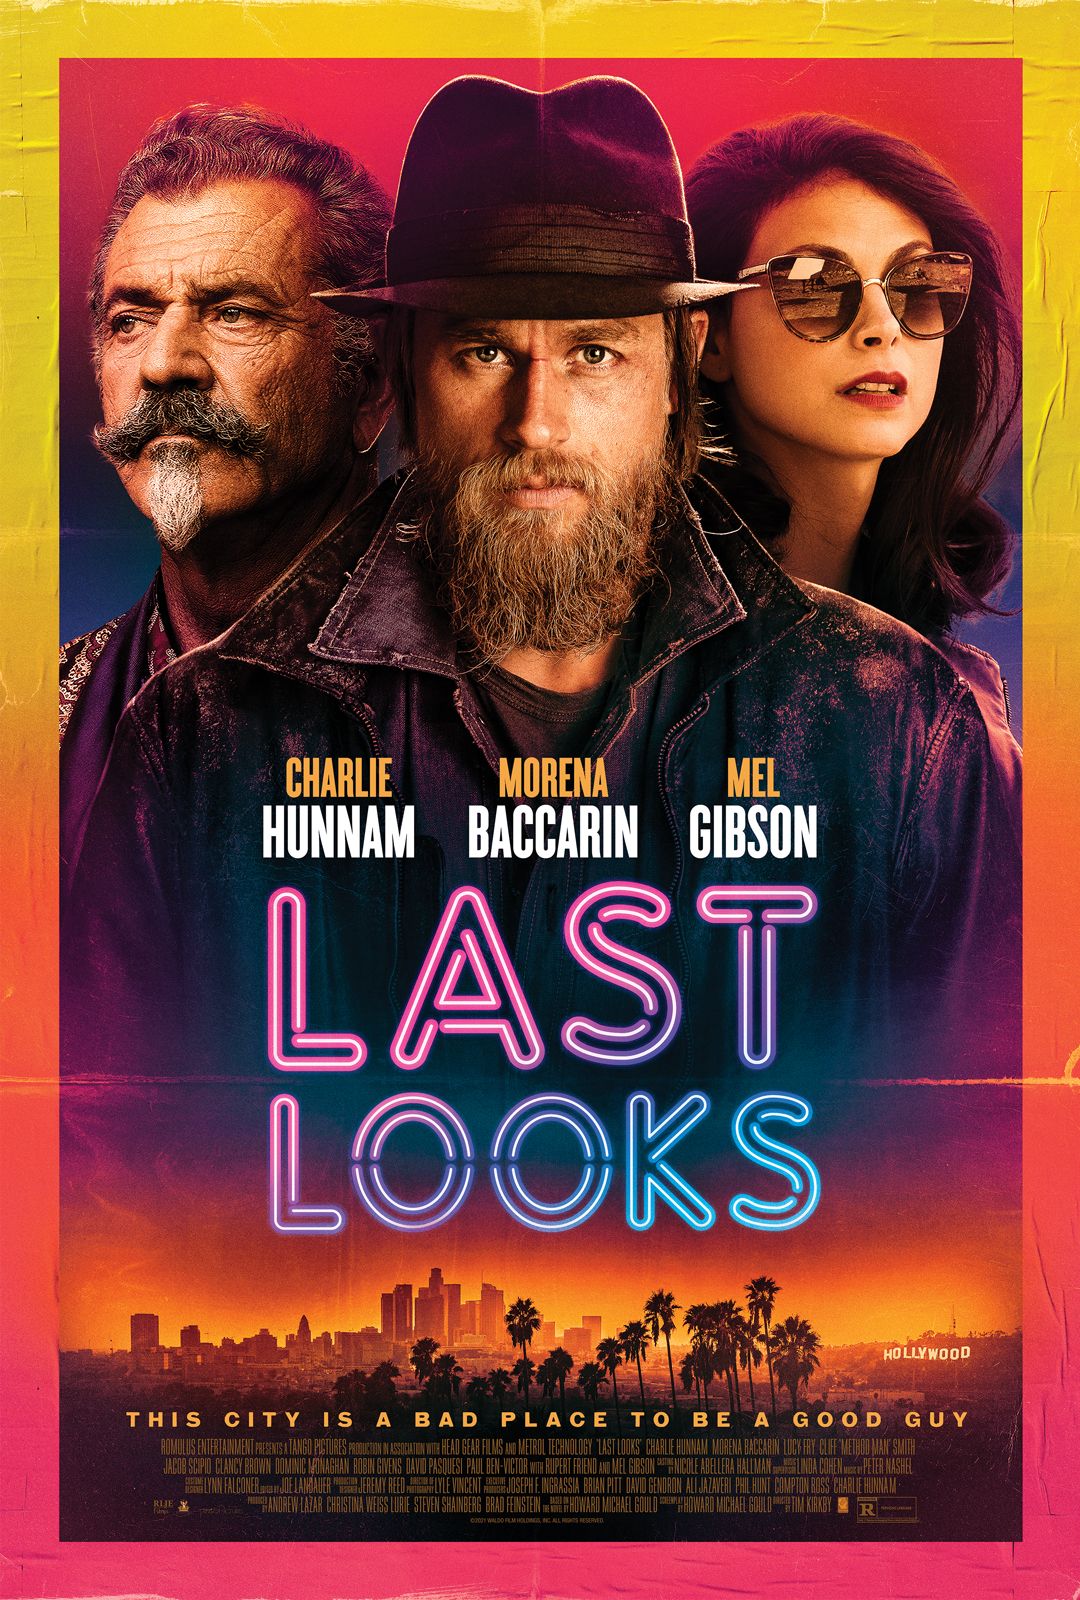 last looks (2021 movie review)